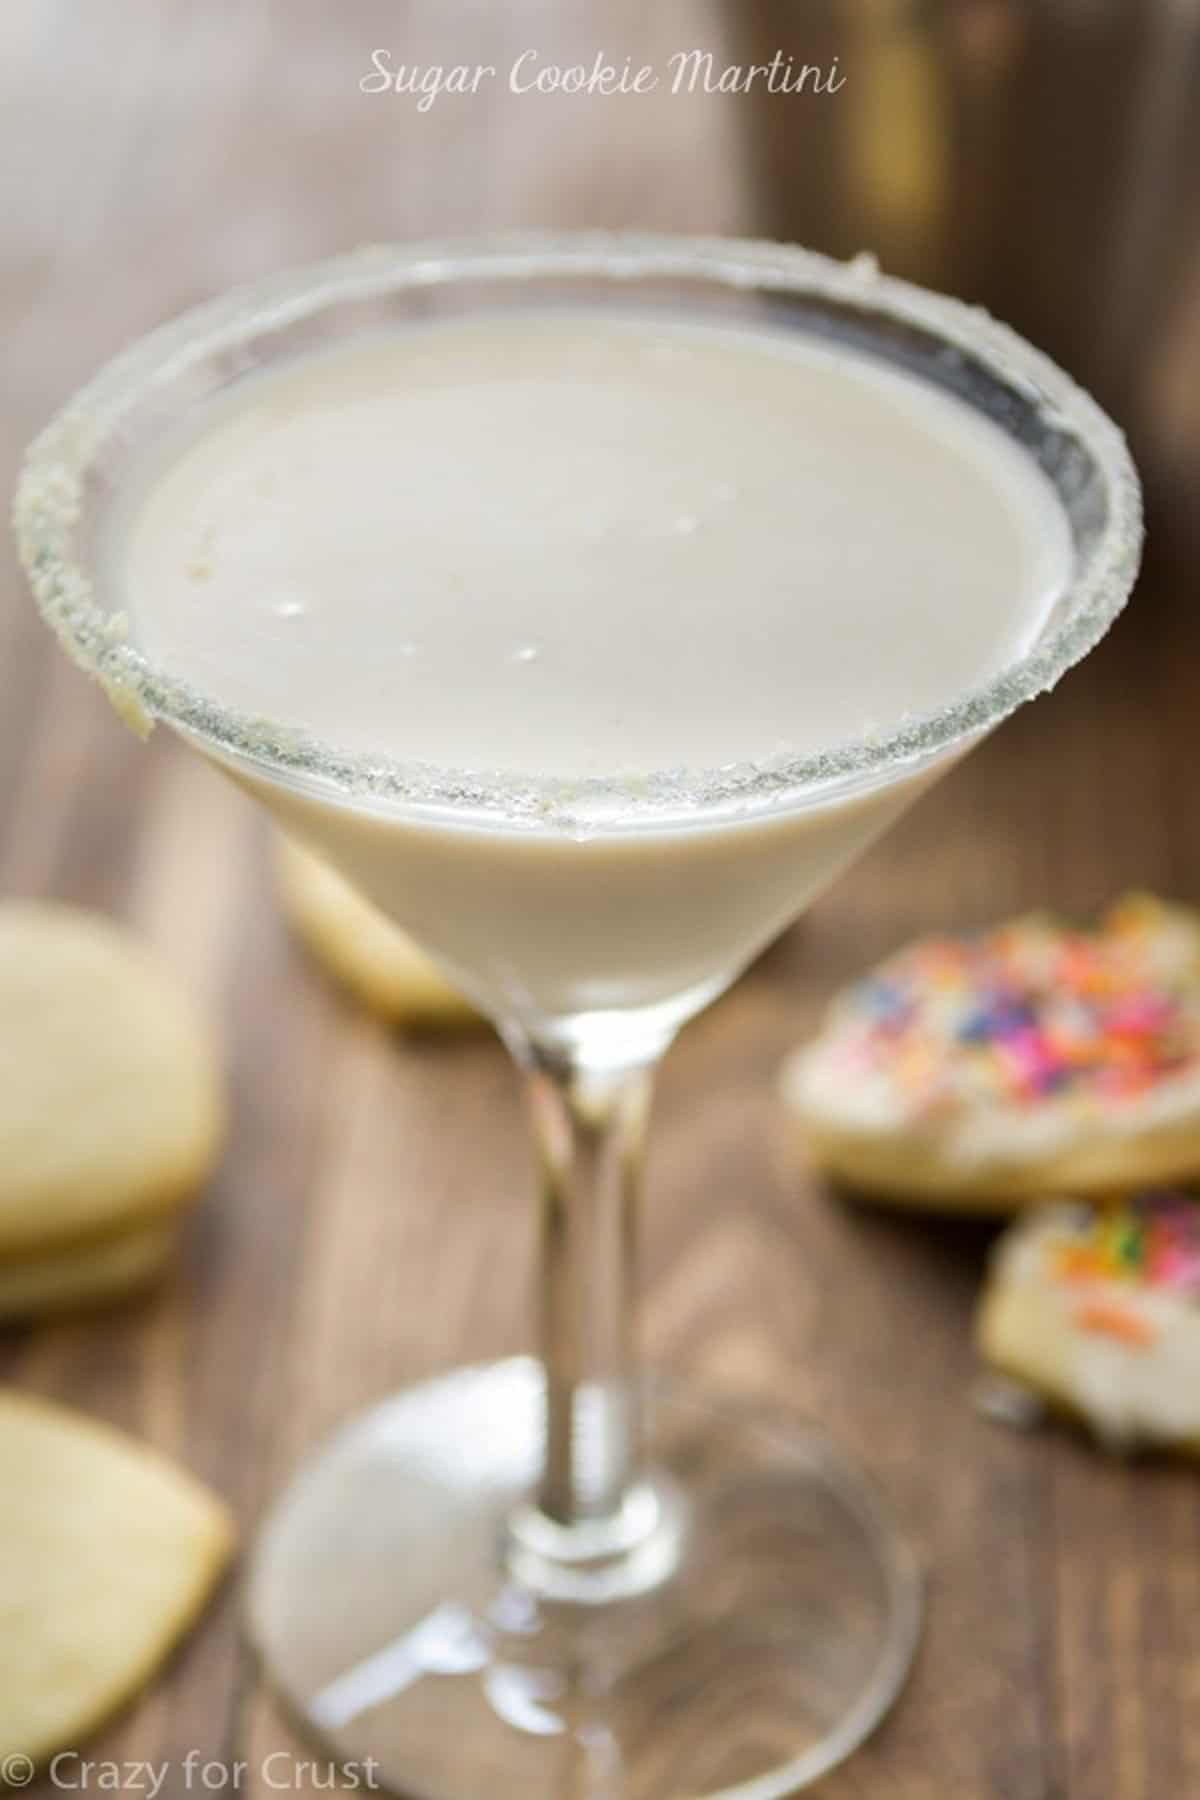 Sugar cookie martini